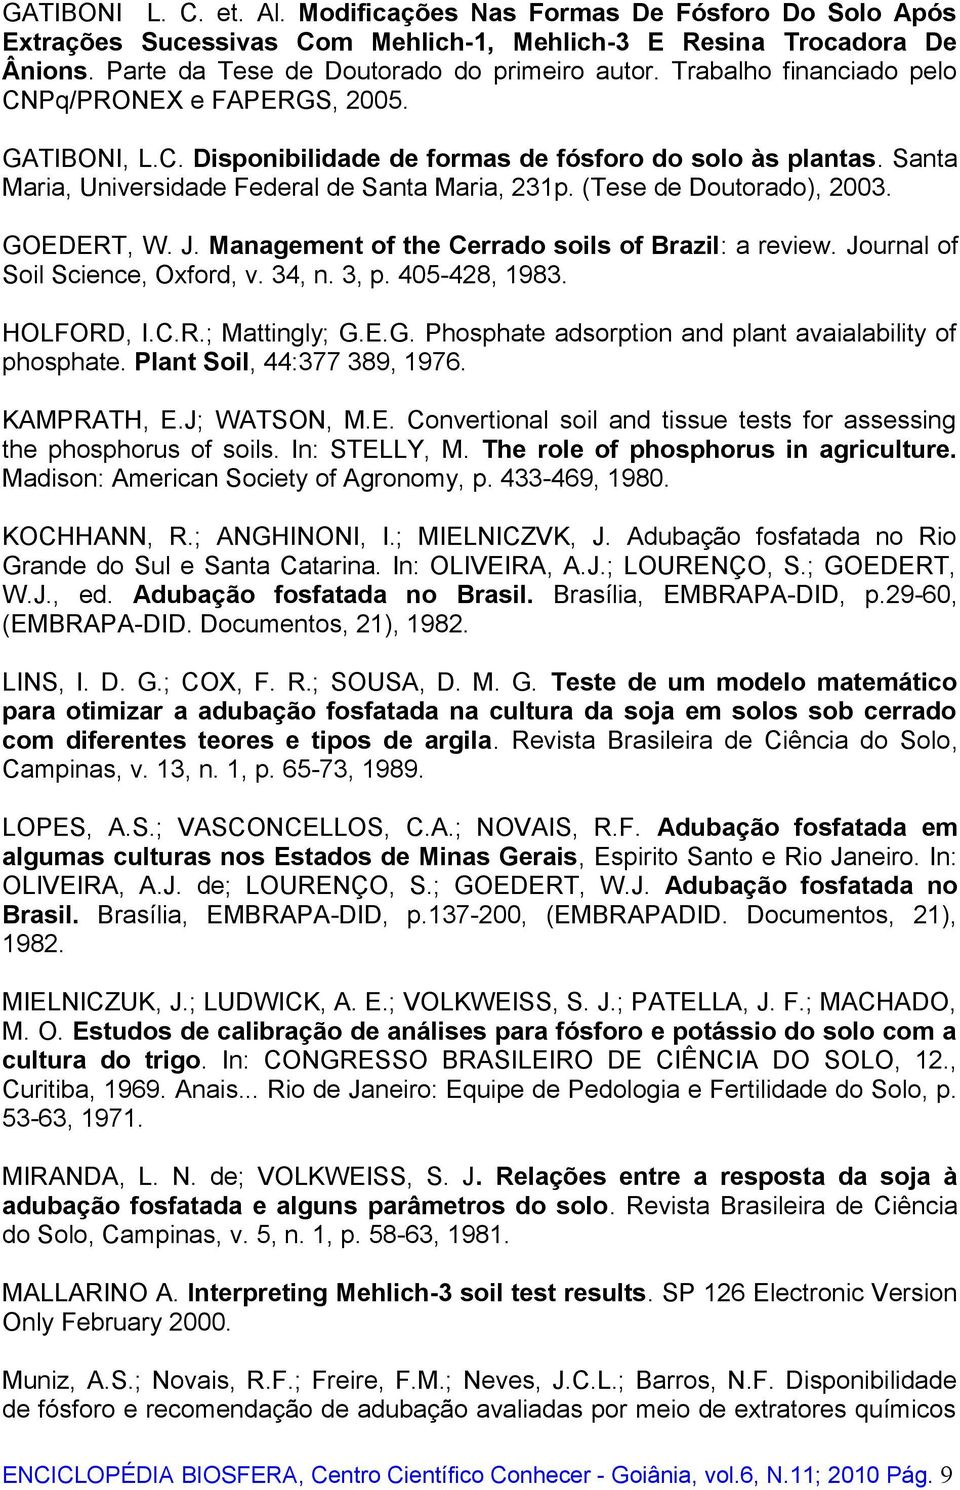 (Tese de Doutorado), 2003. GOEDERT, W. J. Management of the Cerrado soils of Brazil: a review. Journal of Soil Science, Oxford, v. 34, n. 3, p. 405-428, 1983. HOLFORD, I.C.R.; Mattingly; G.E.G. Phosphate adsorption and plant avaialability of phosphate.